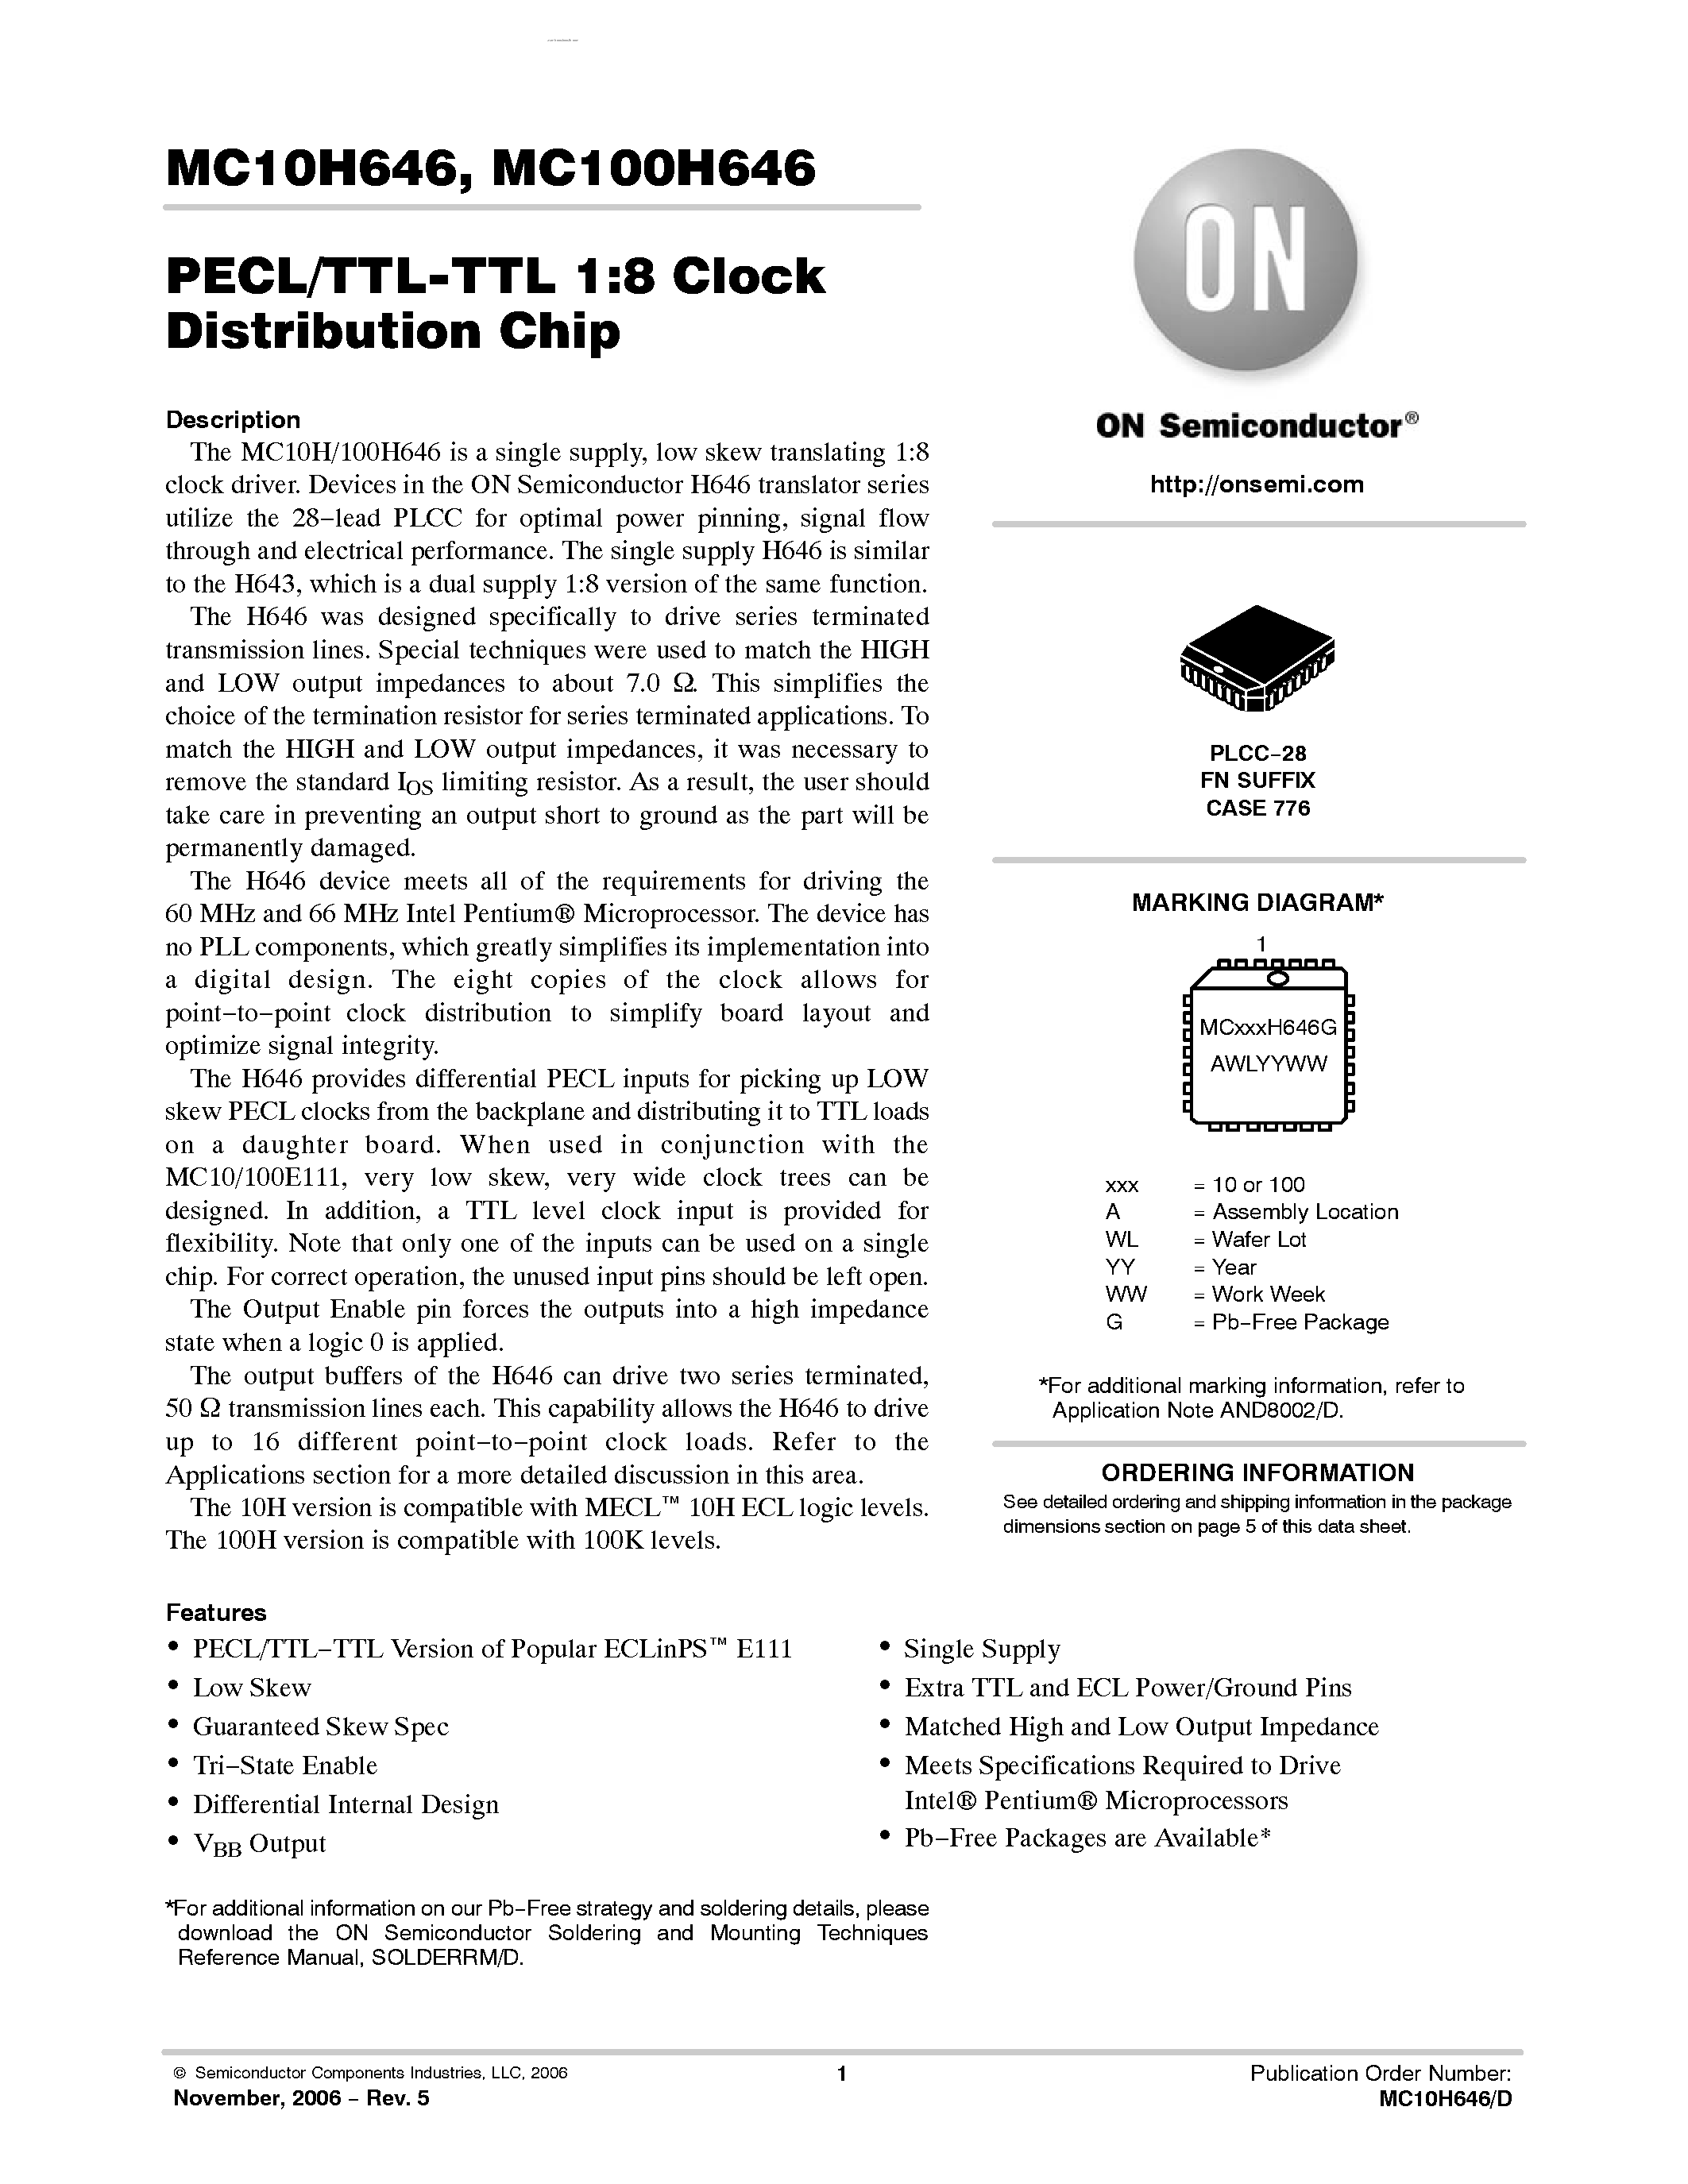 Даташит MC100H646-PENTIUM MICROPROCESSOR PECL/TTL-TTL CLOCK DRIVER страница 1